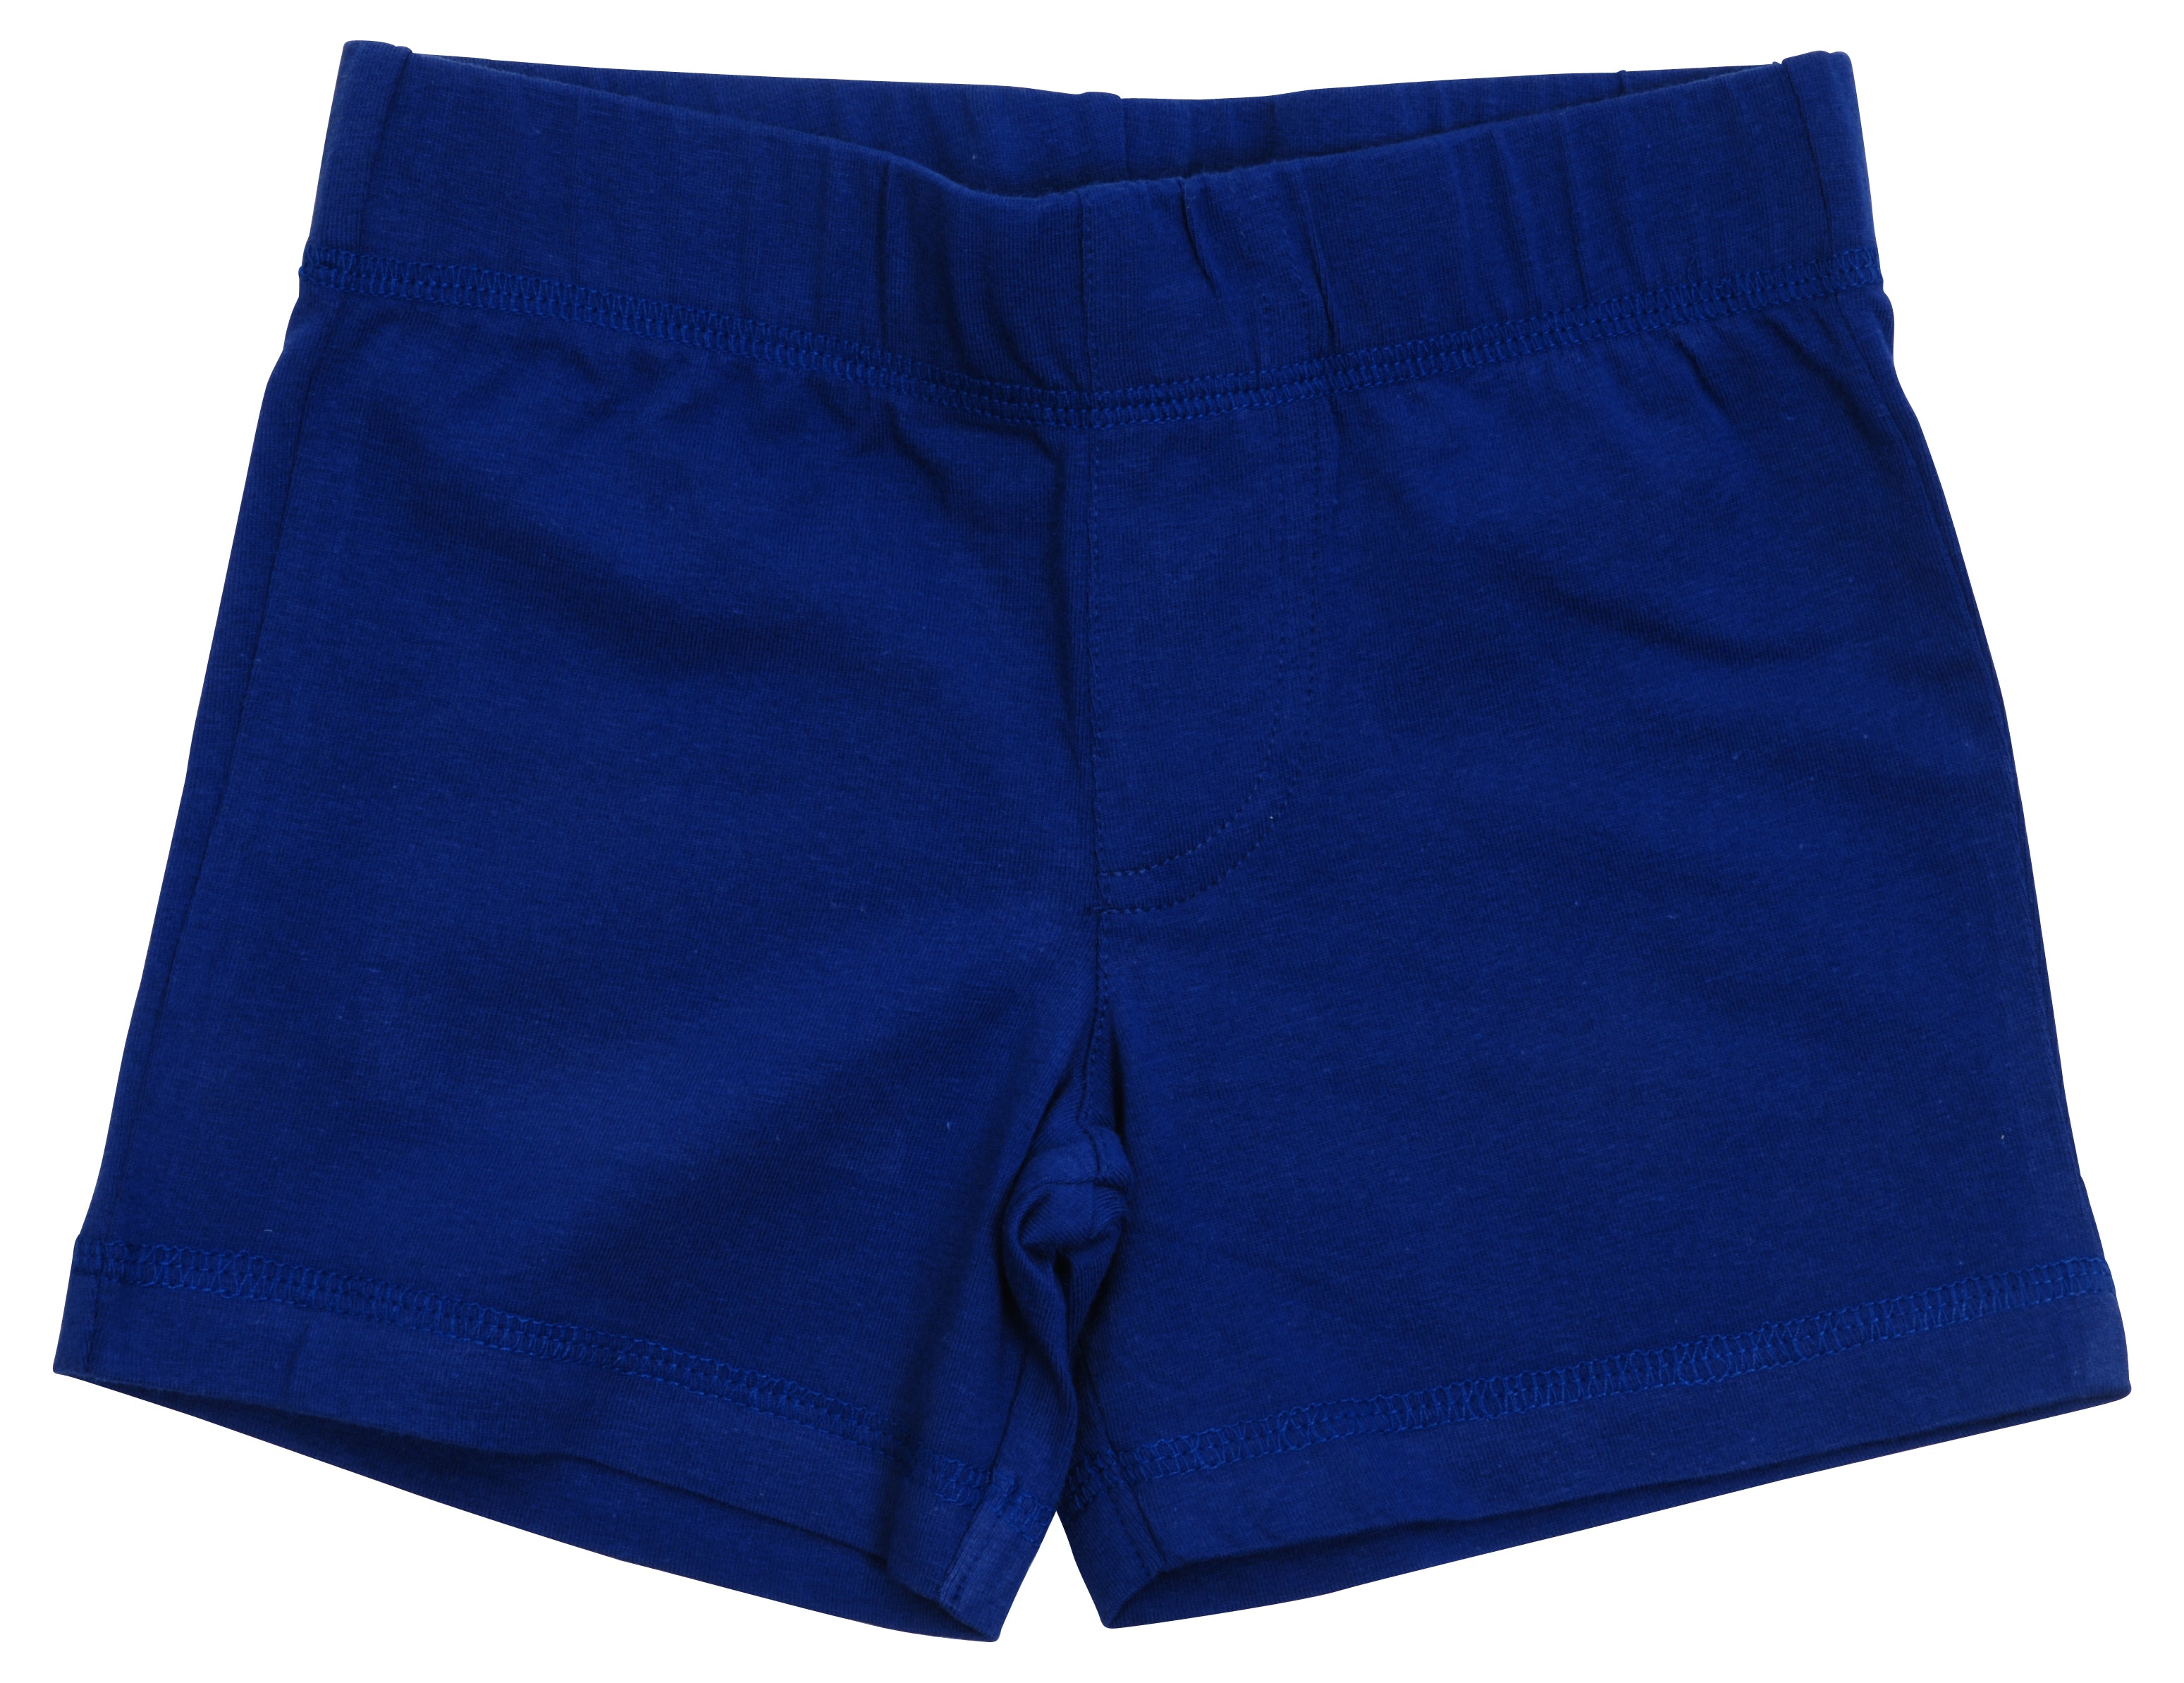 More Than A Fling - Shorts - Mazzarine Blue